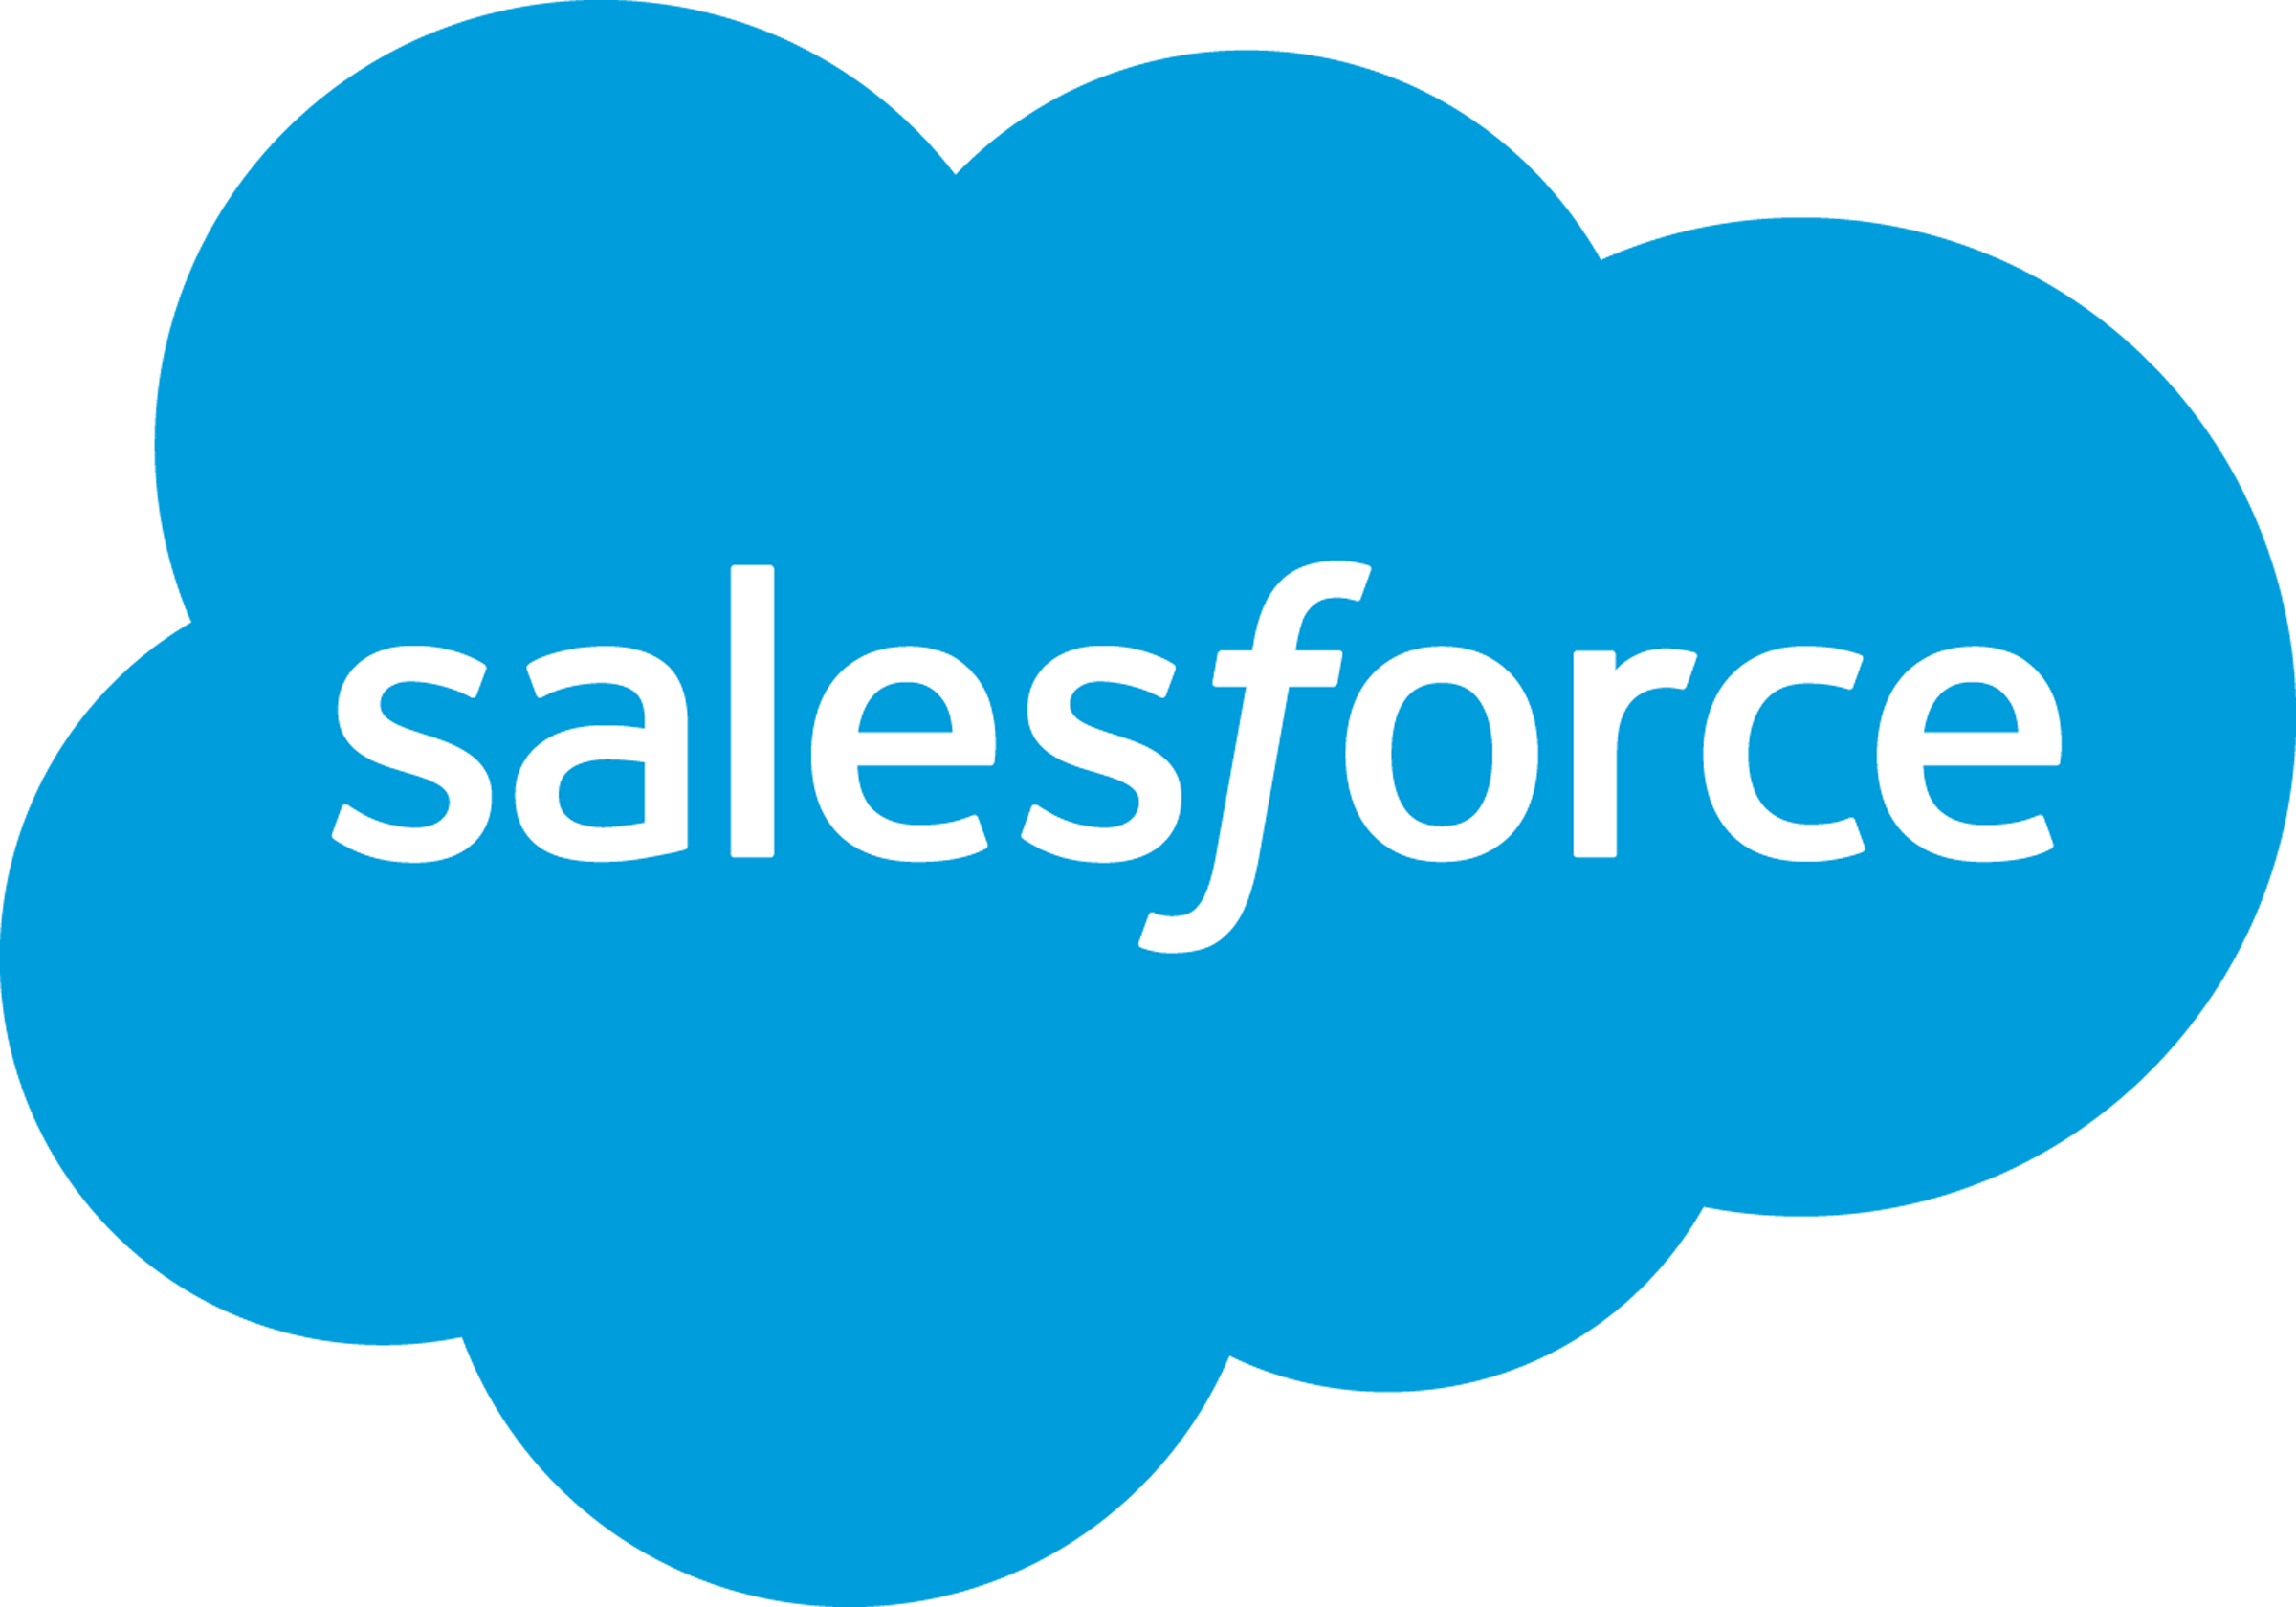 salesforce-logo-01